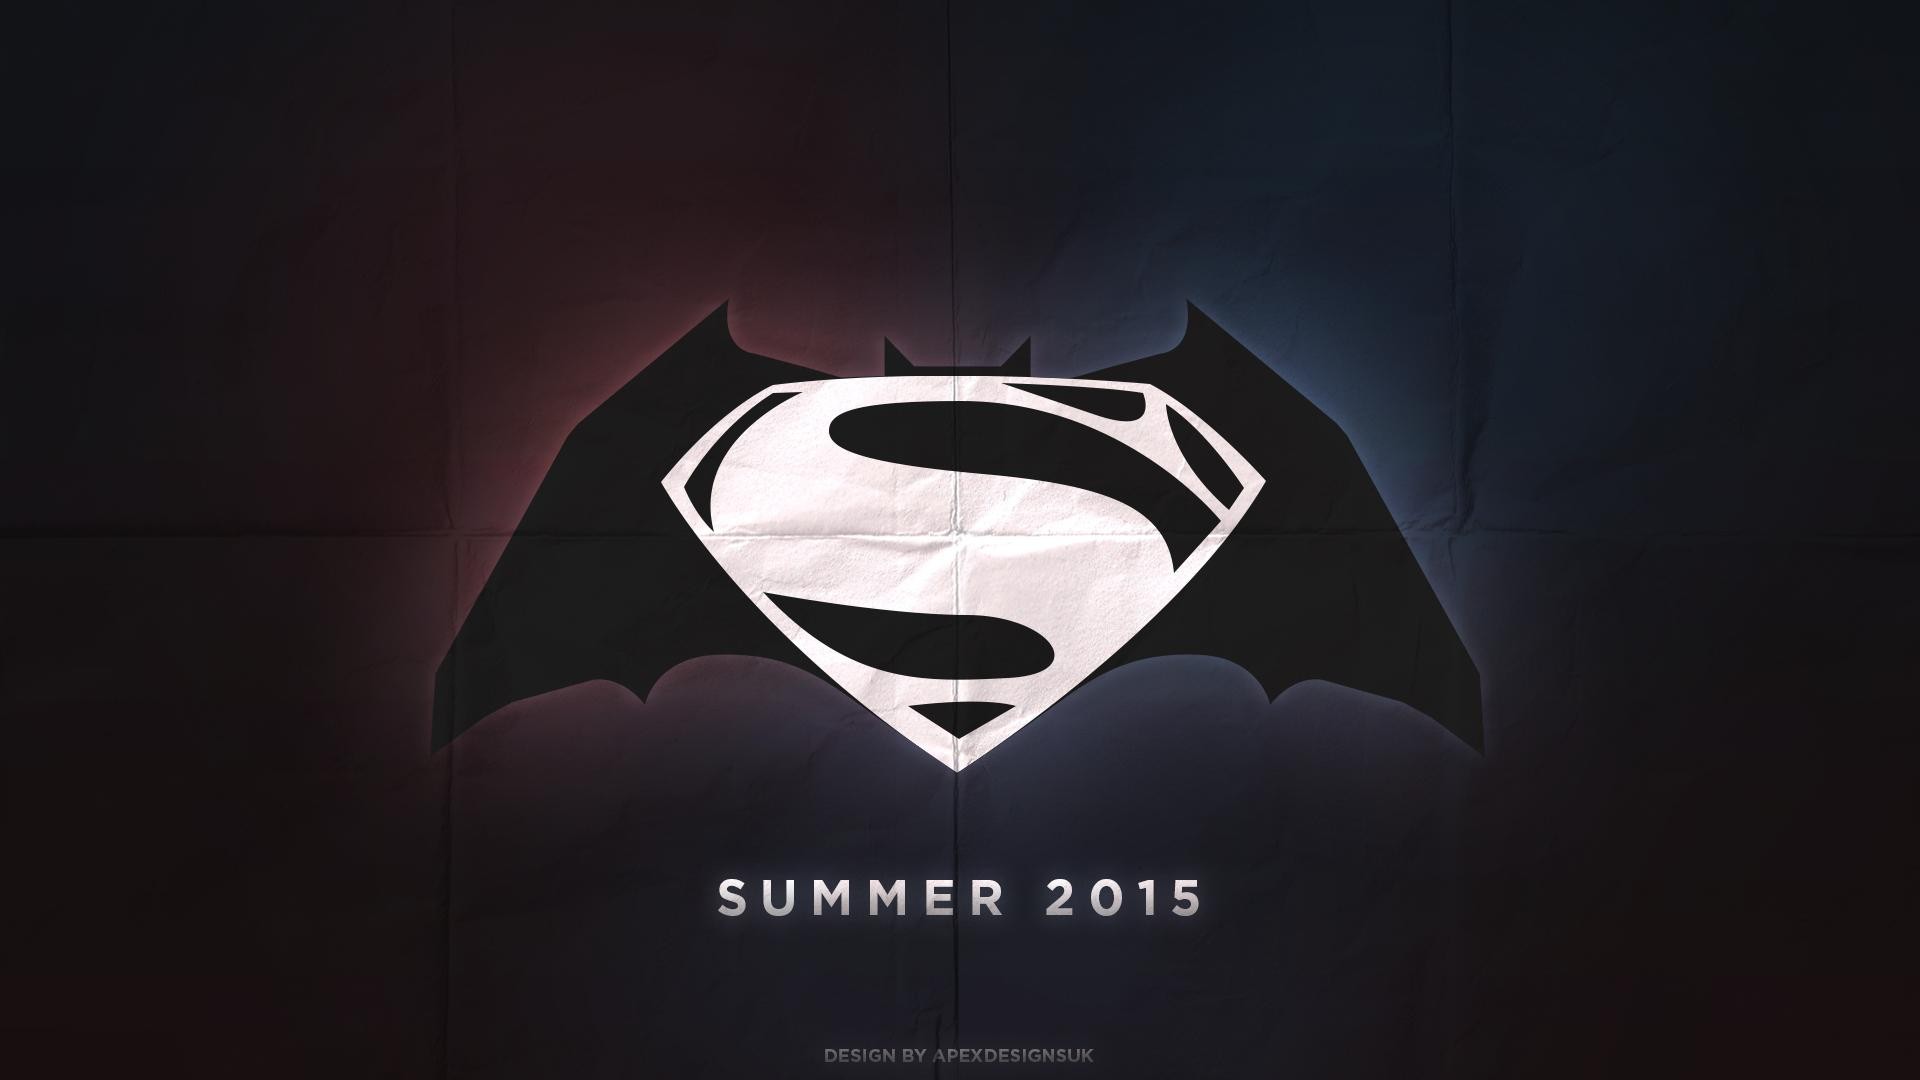 General 1920x1080 Batman v Superman: Dawn of Justice movies 2015 (Year) logo Batman logo superman logo simple background digital art watermarked